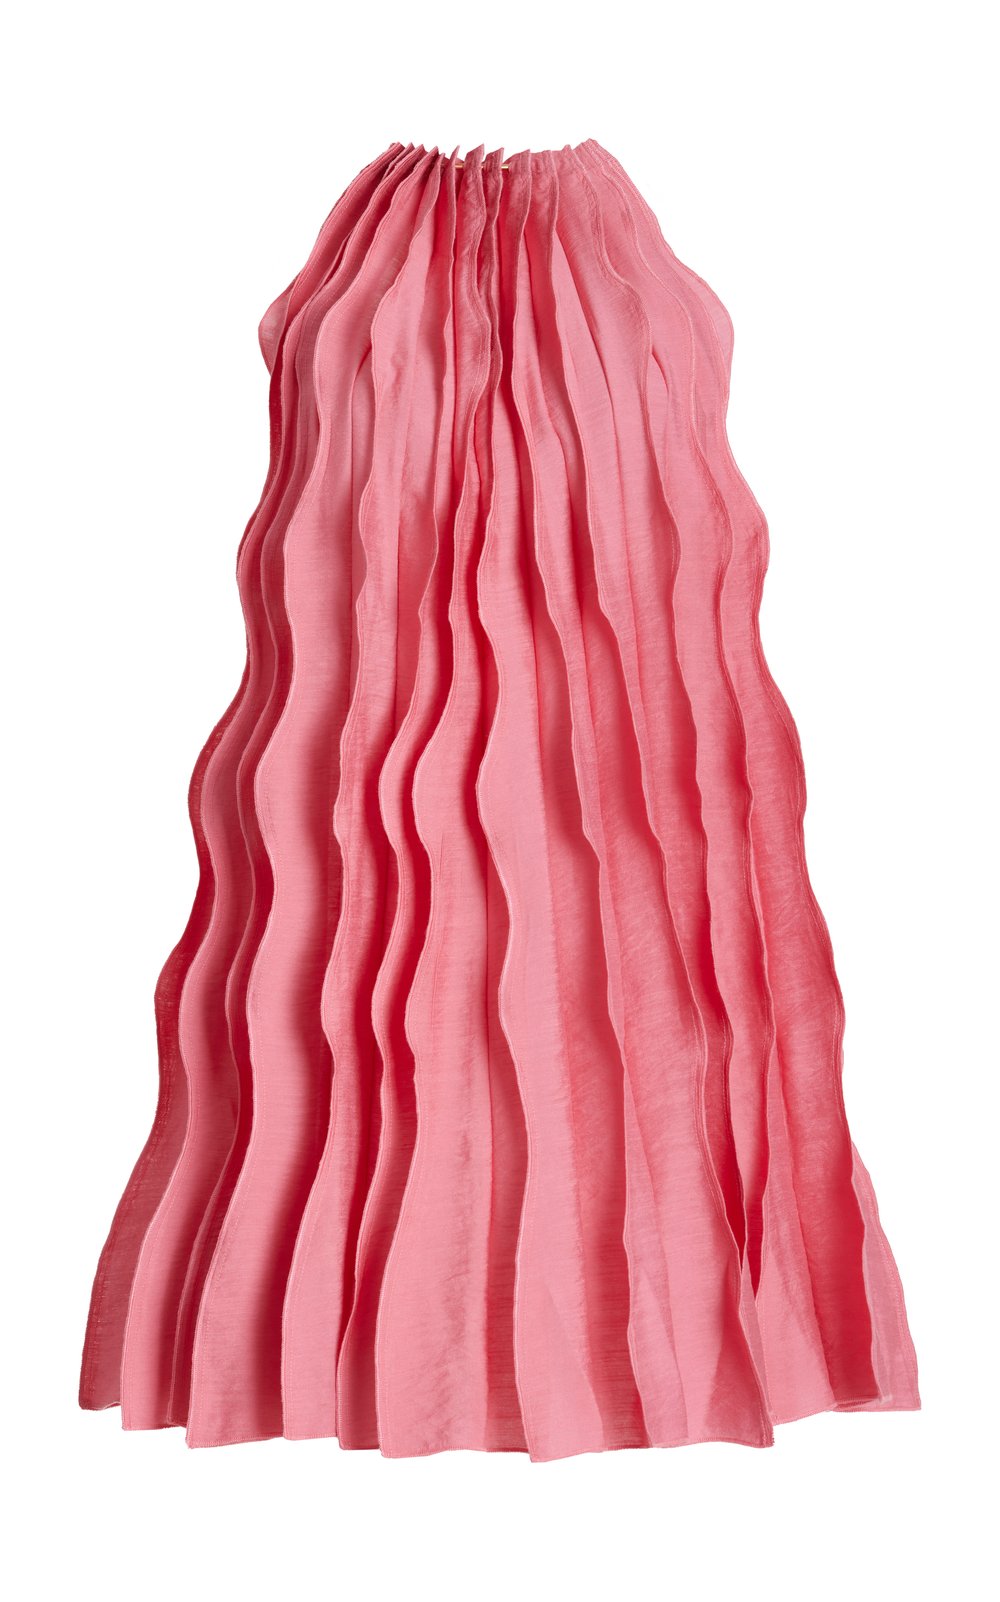 cult-gaia-pink-marla-dress.jpg